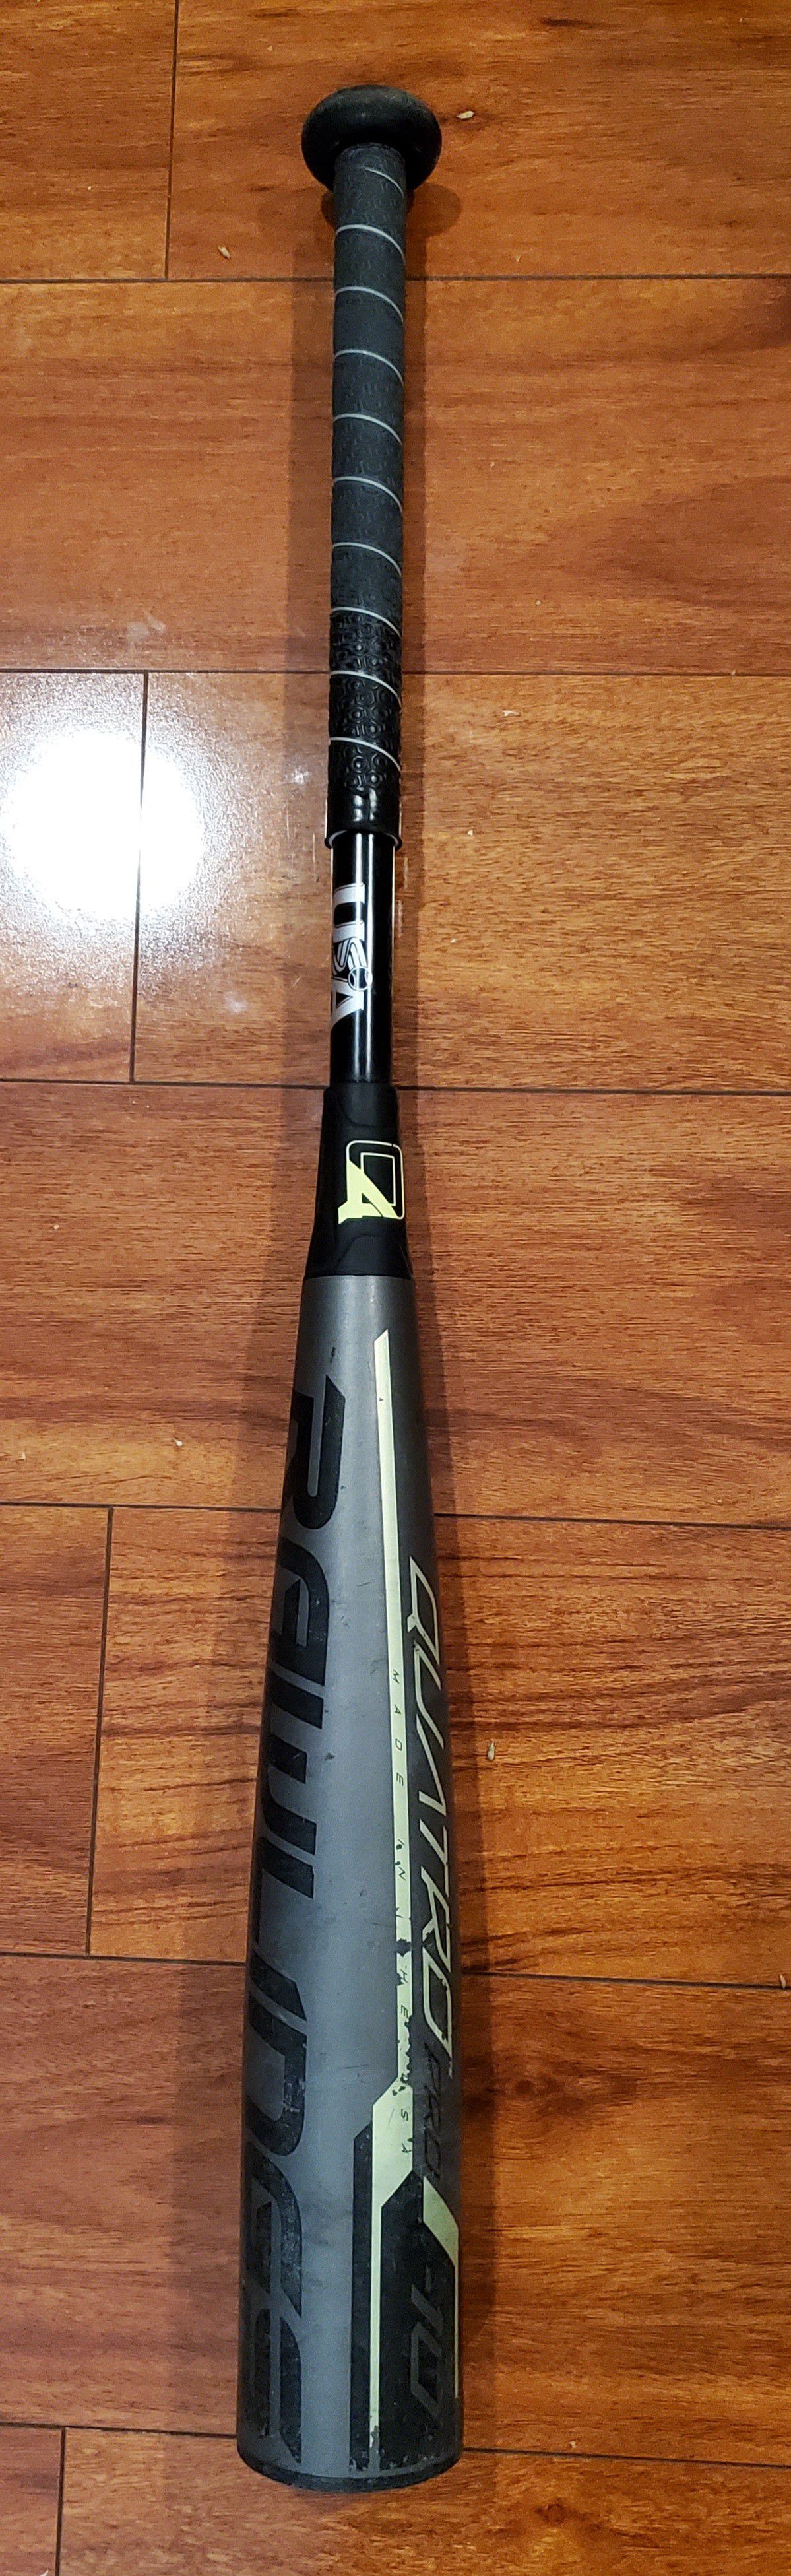 Rawlings Quatro Youth Baseball bat. Used 3 months, good condition. $175